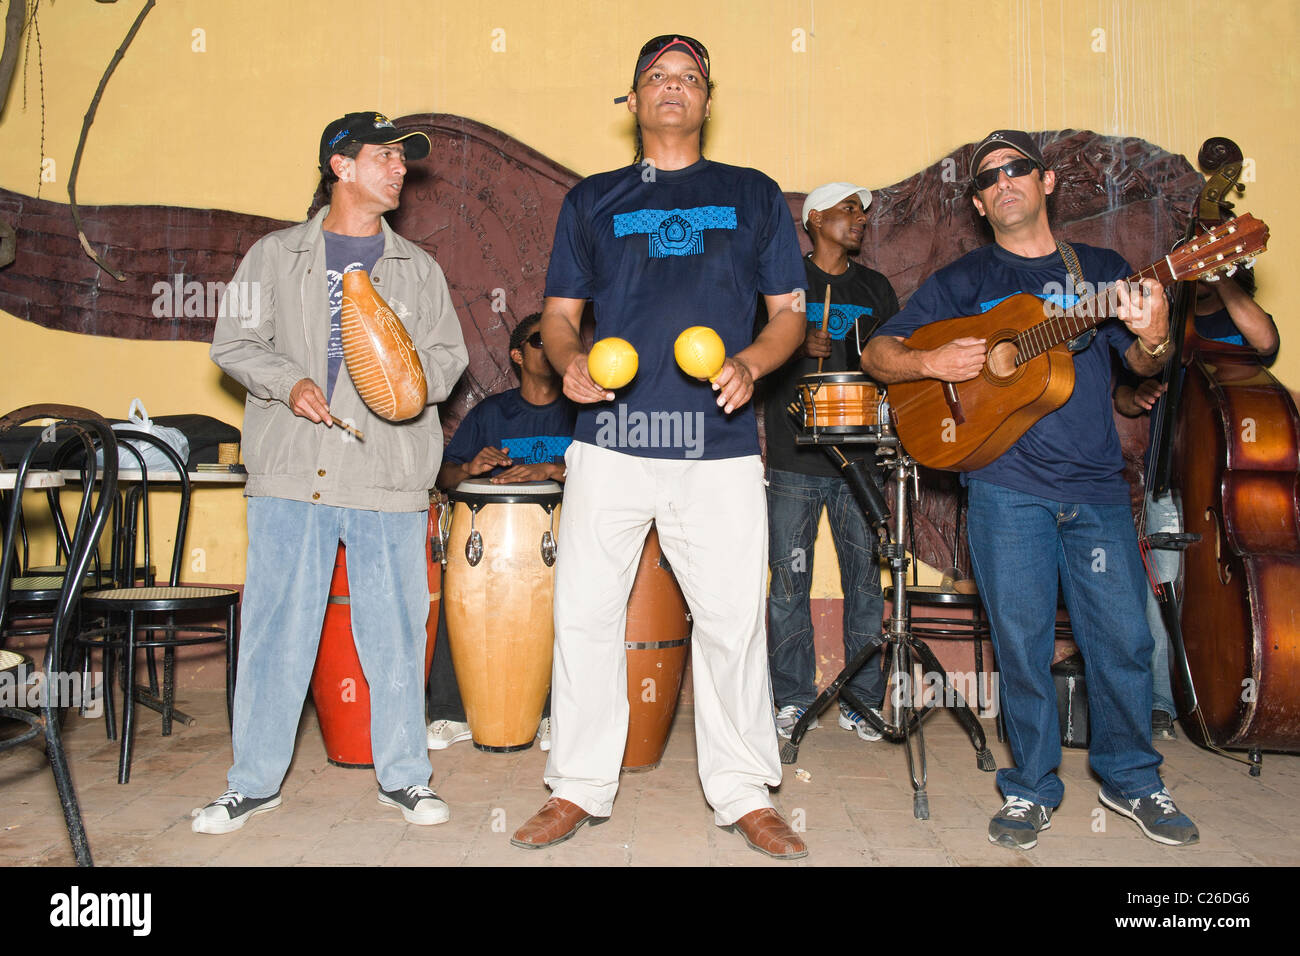 Groupe de musiciens, Casa de la trova, Trinidad, la province de Sancti Spiritus, Cuba Banque D'Images